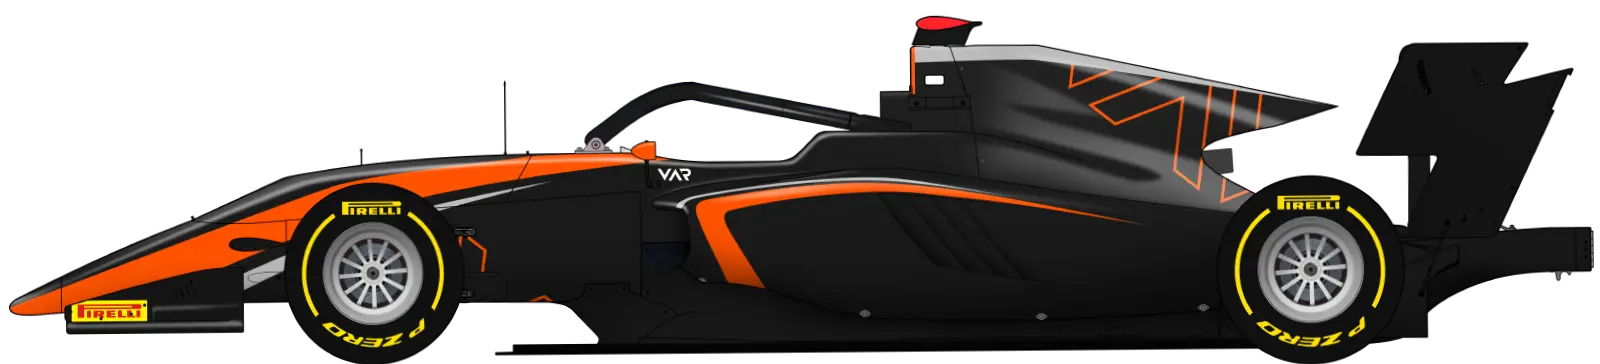 FIA Formula 3 livery